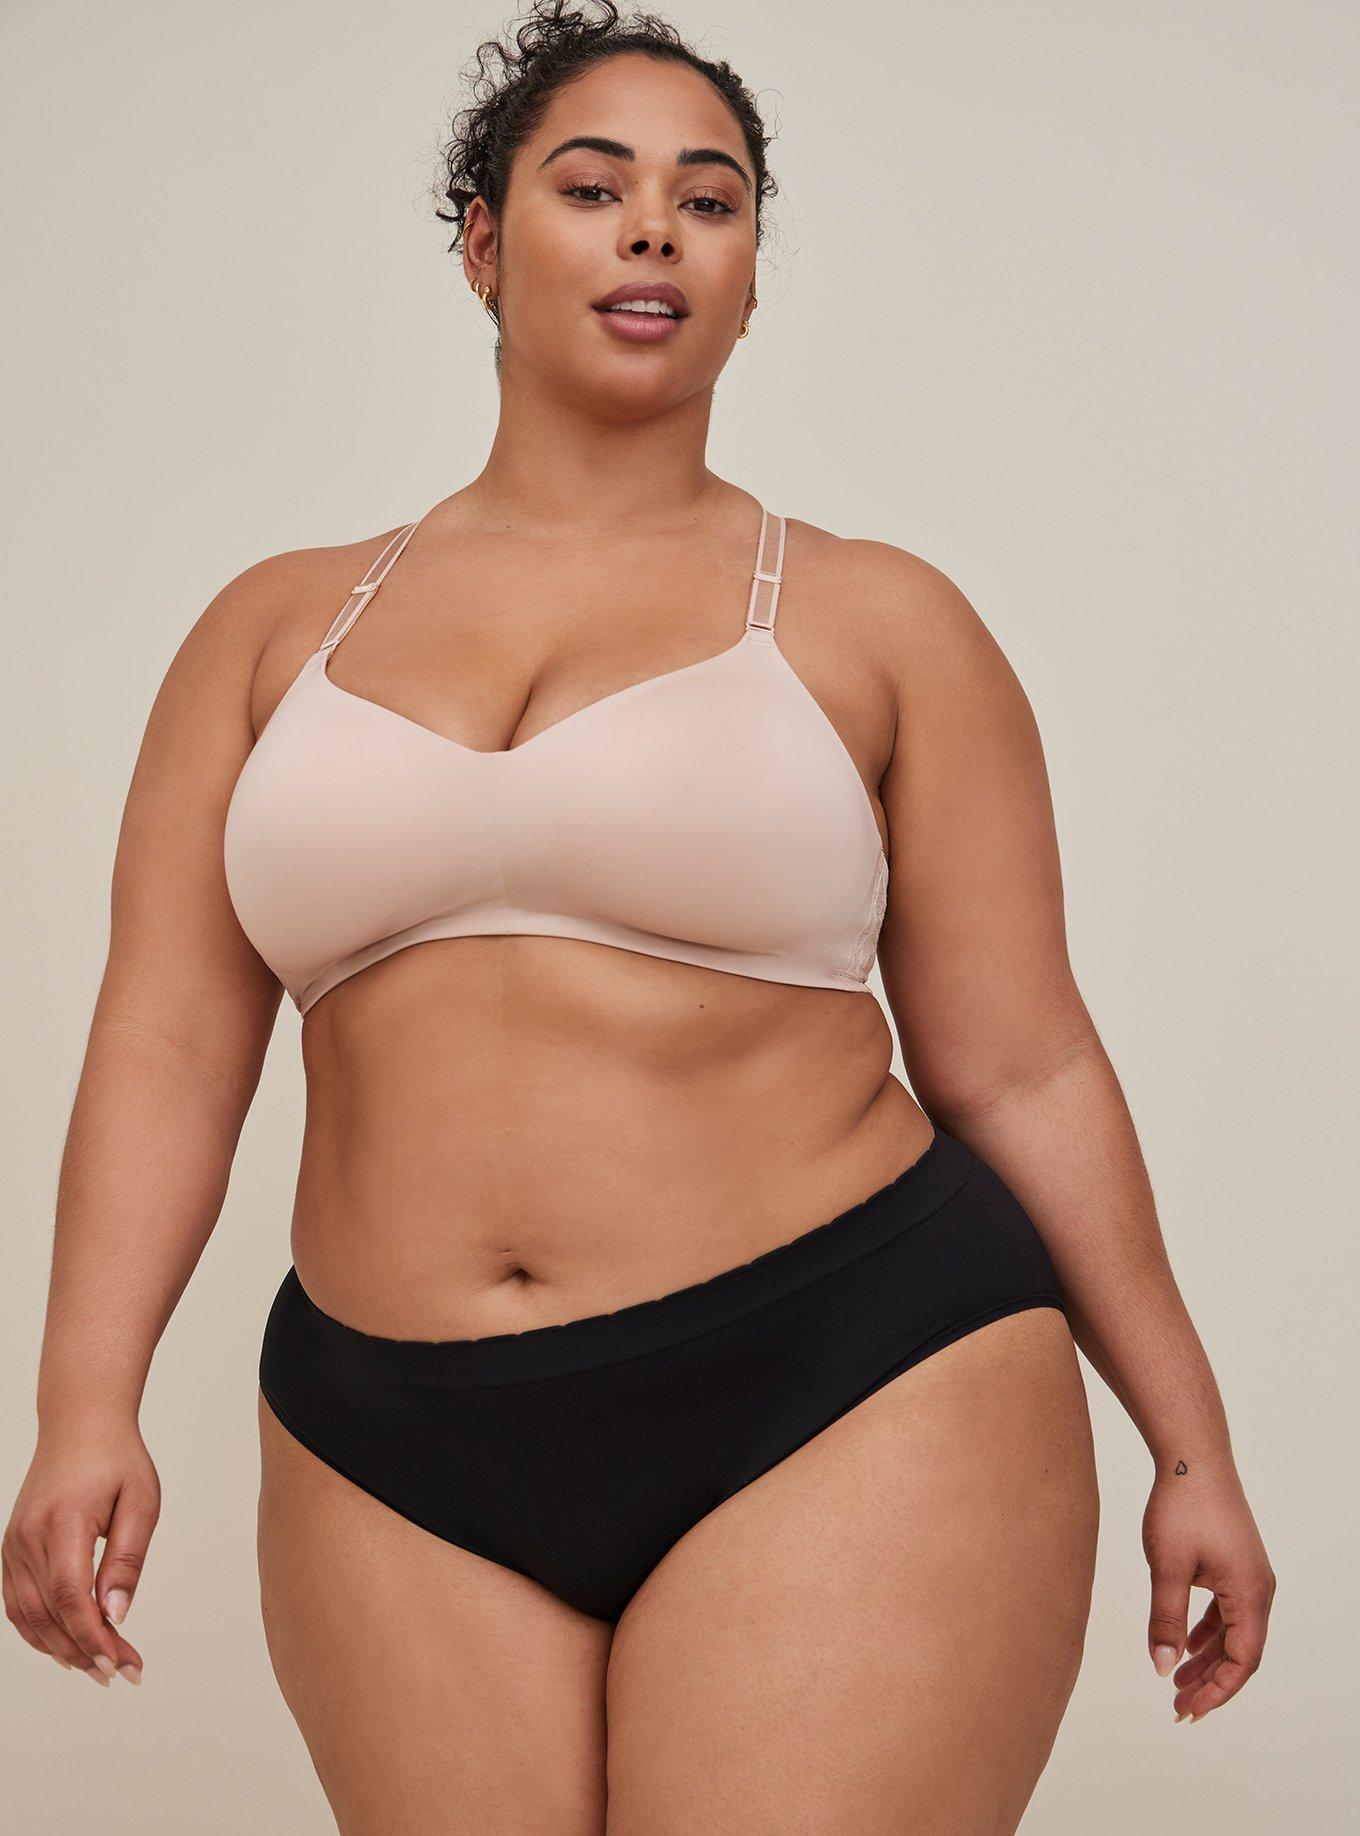 African american girl in bikini hi-res stock photography and